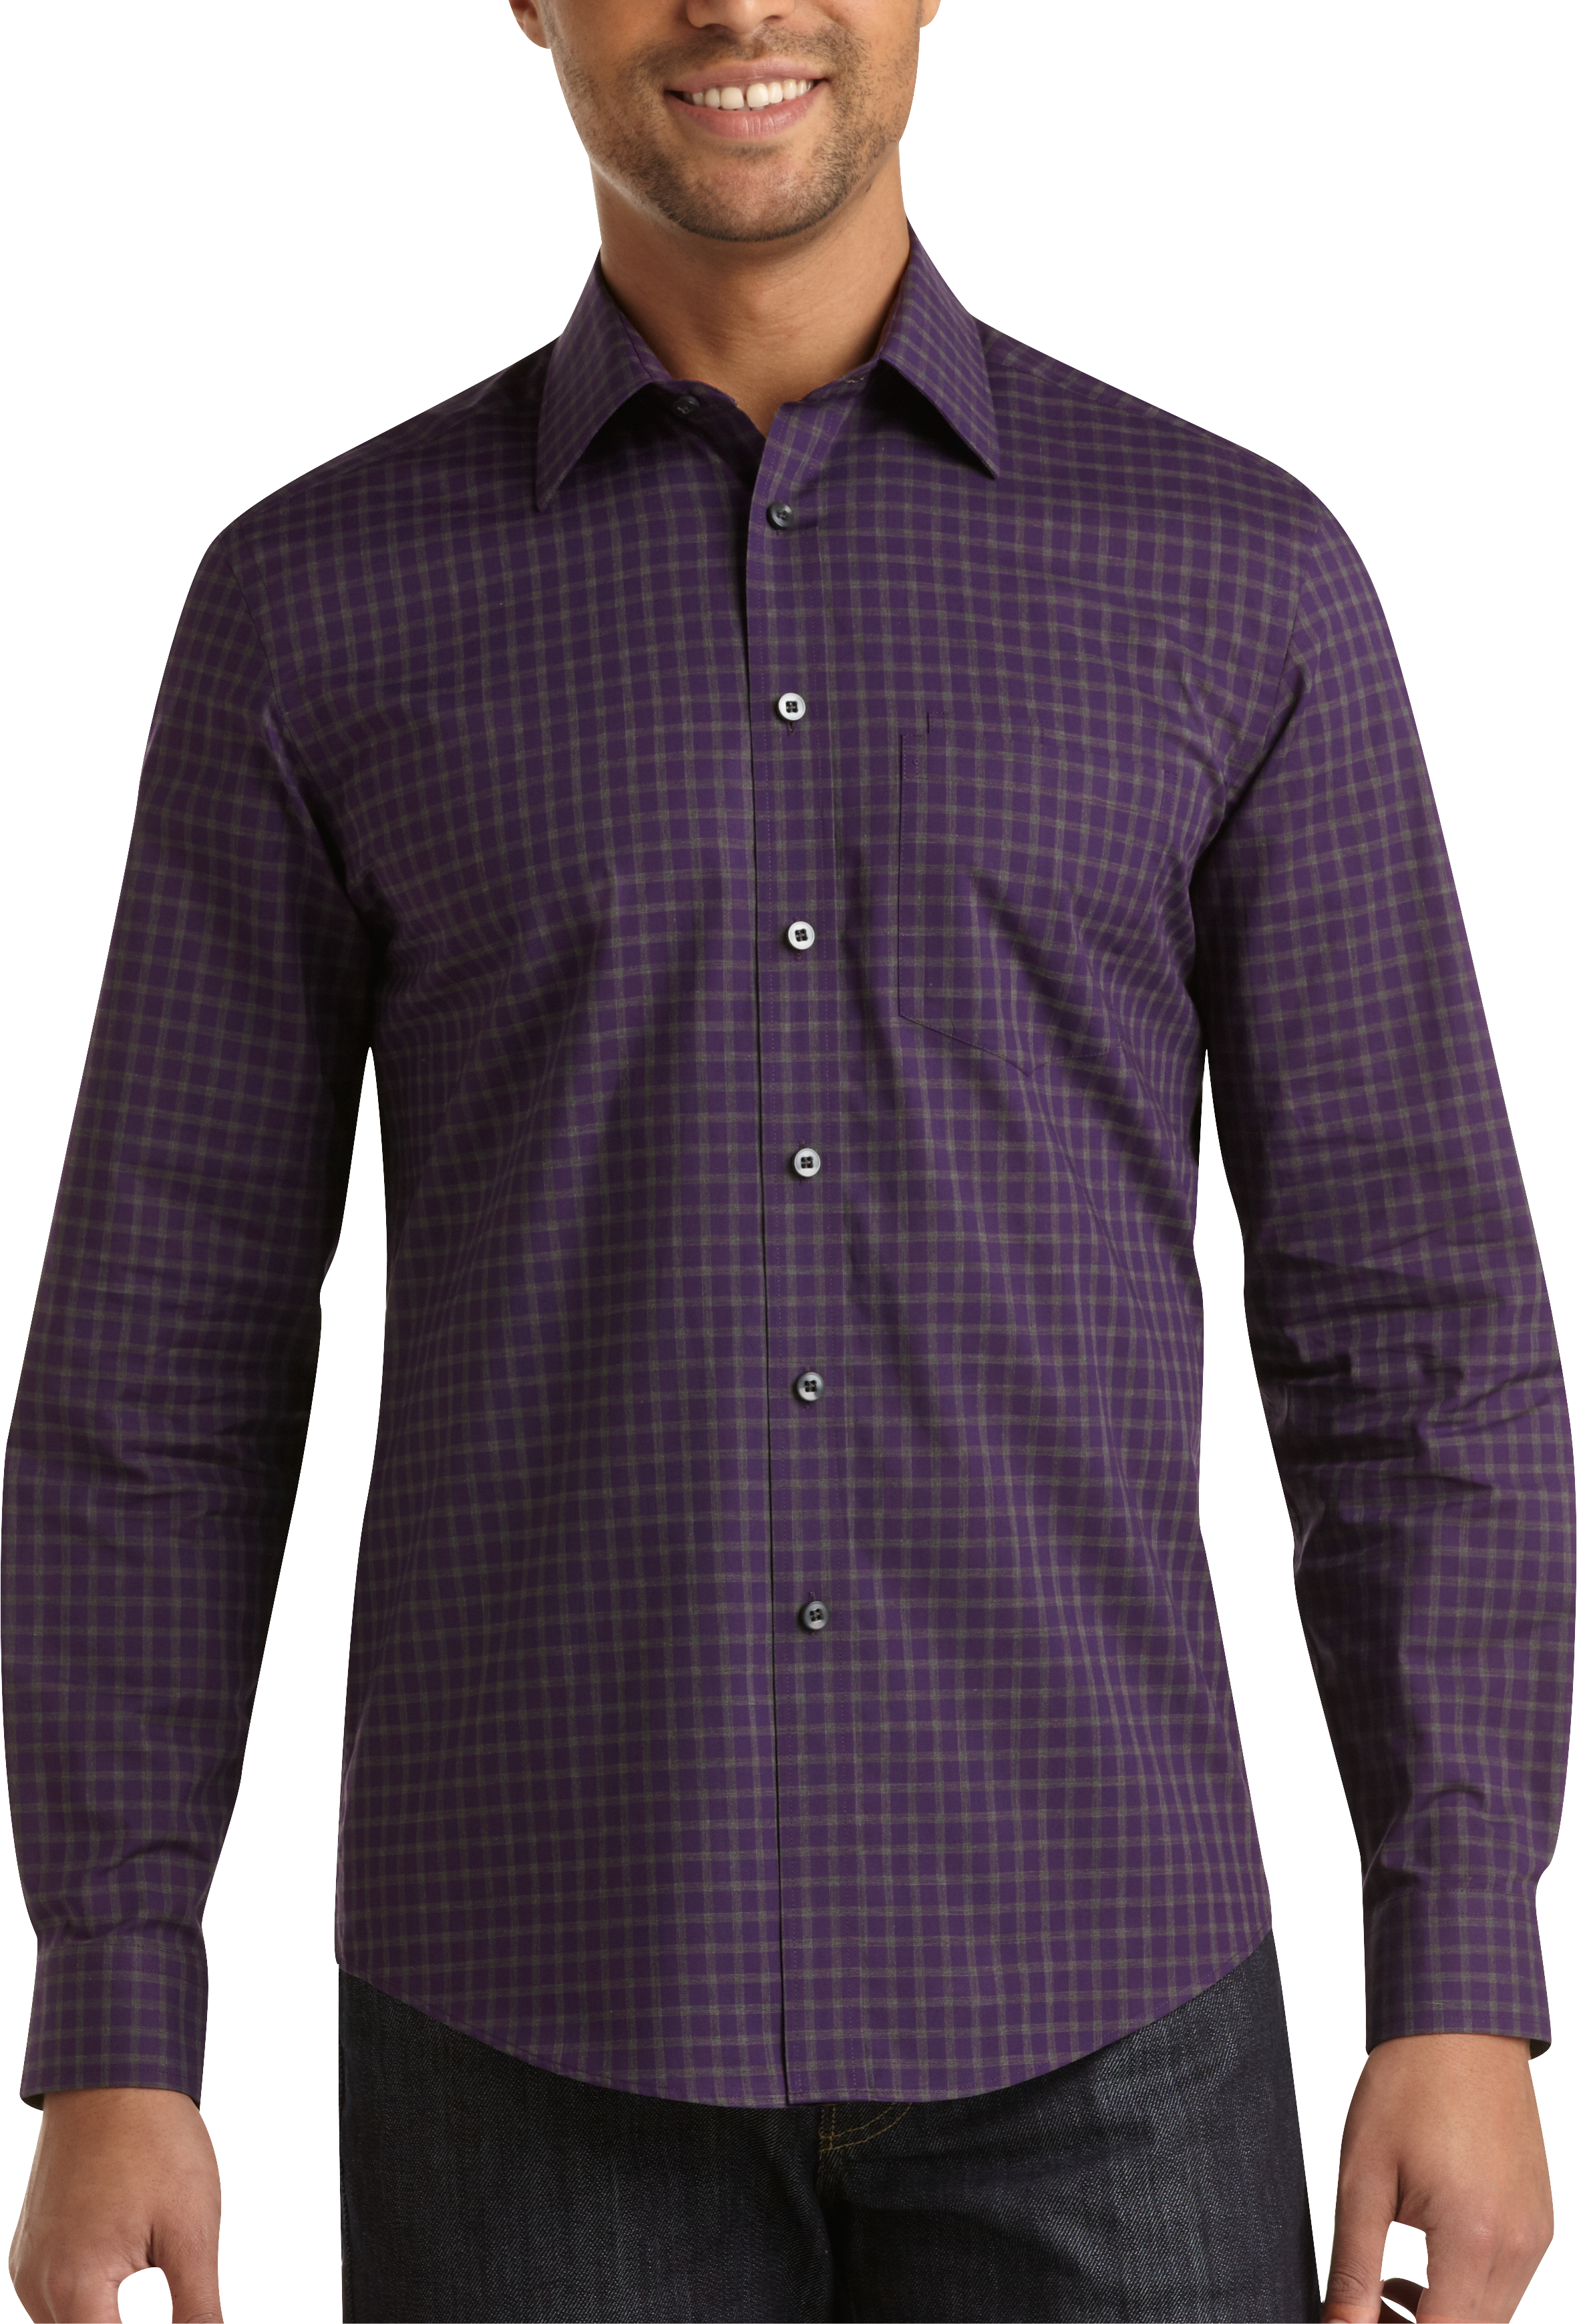 Pronto Uomo Purple Check Modern Fit Sport Shirt - Men's Sale | Men's ...